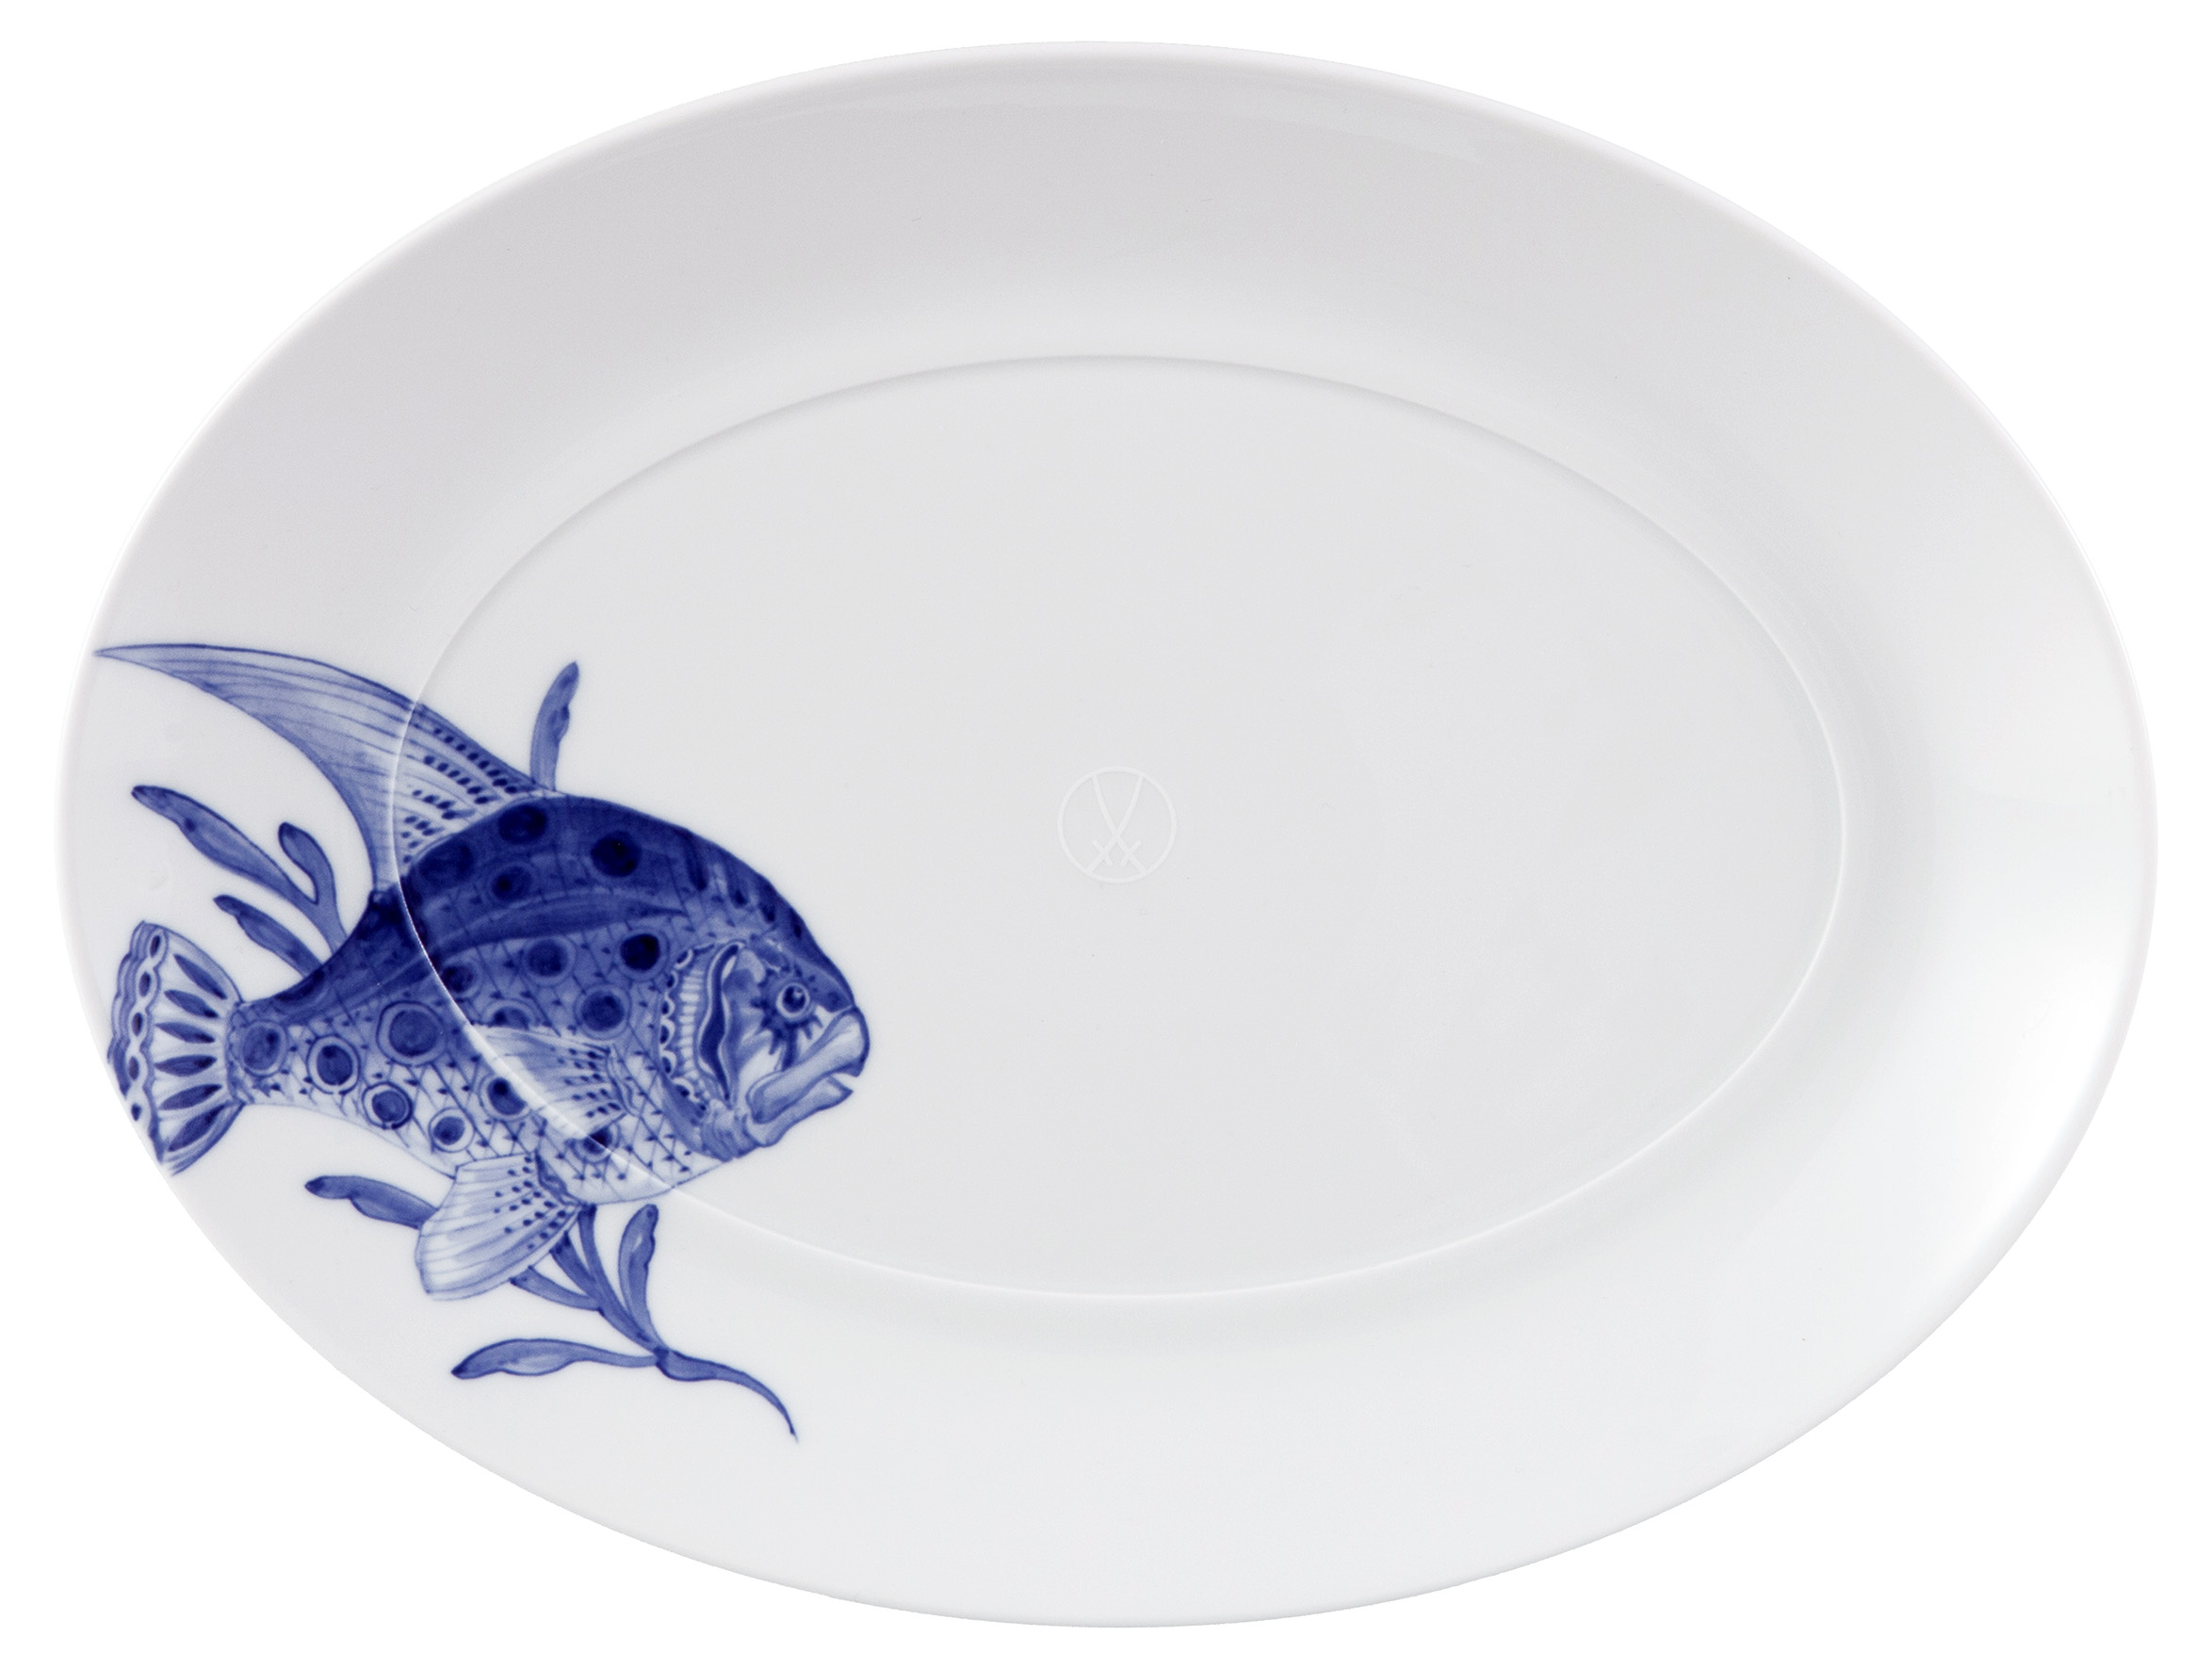 Platte 32cm, oval, Motive Fisch Cosmopolitan Meissen